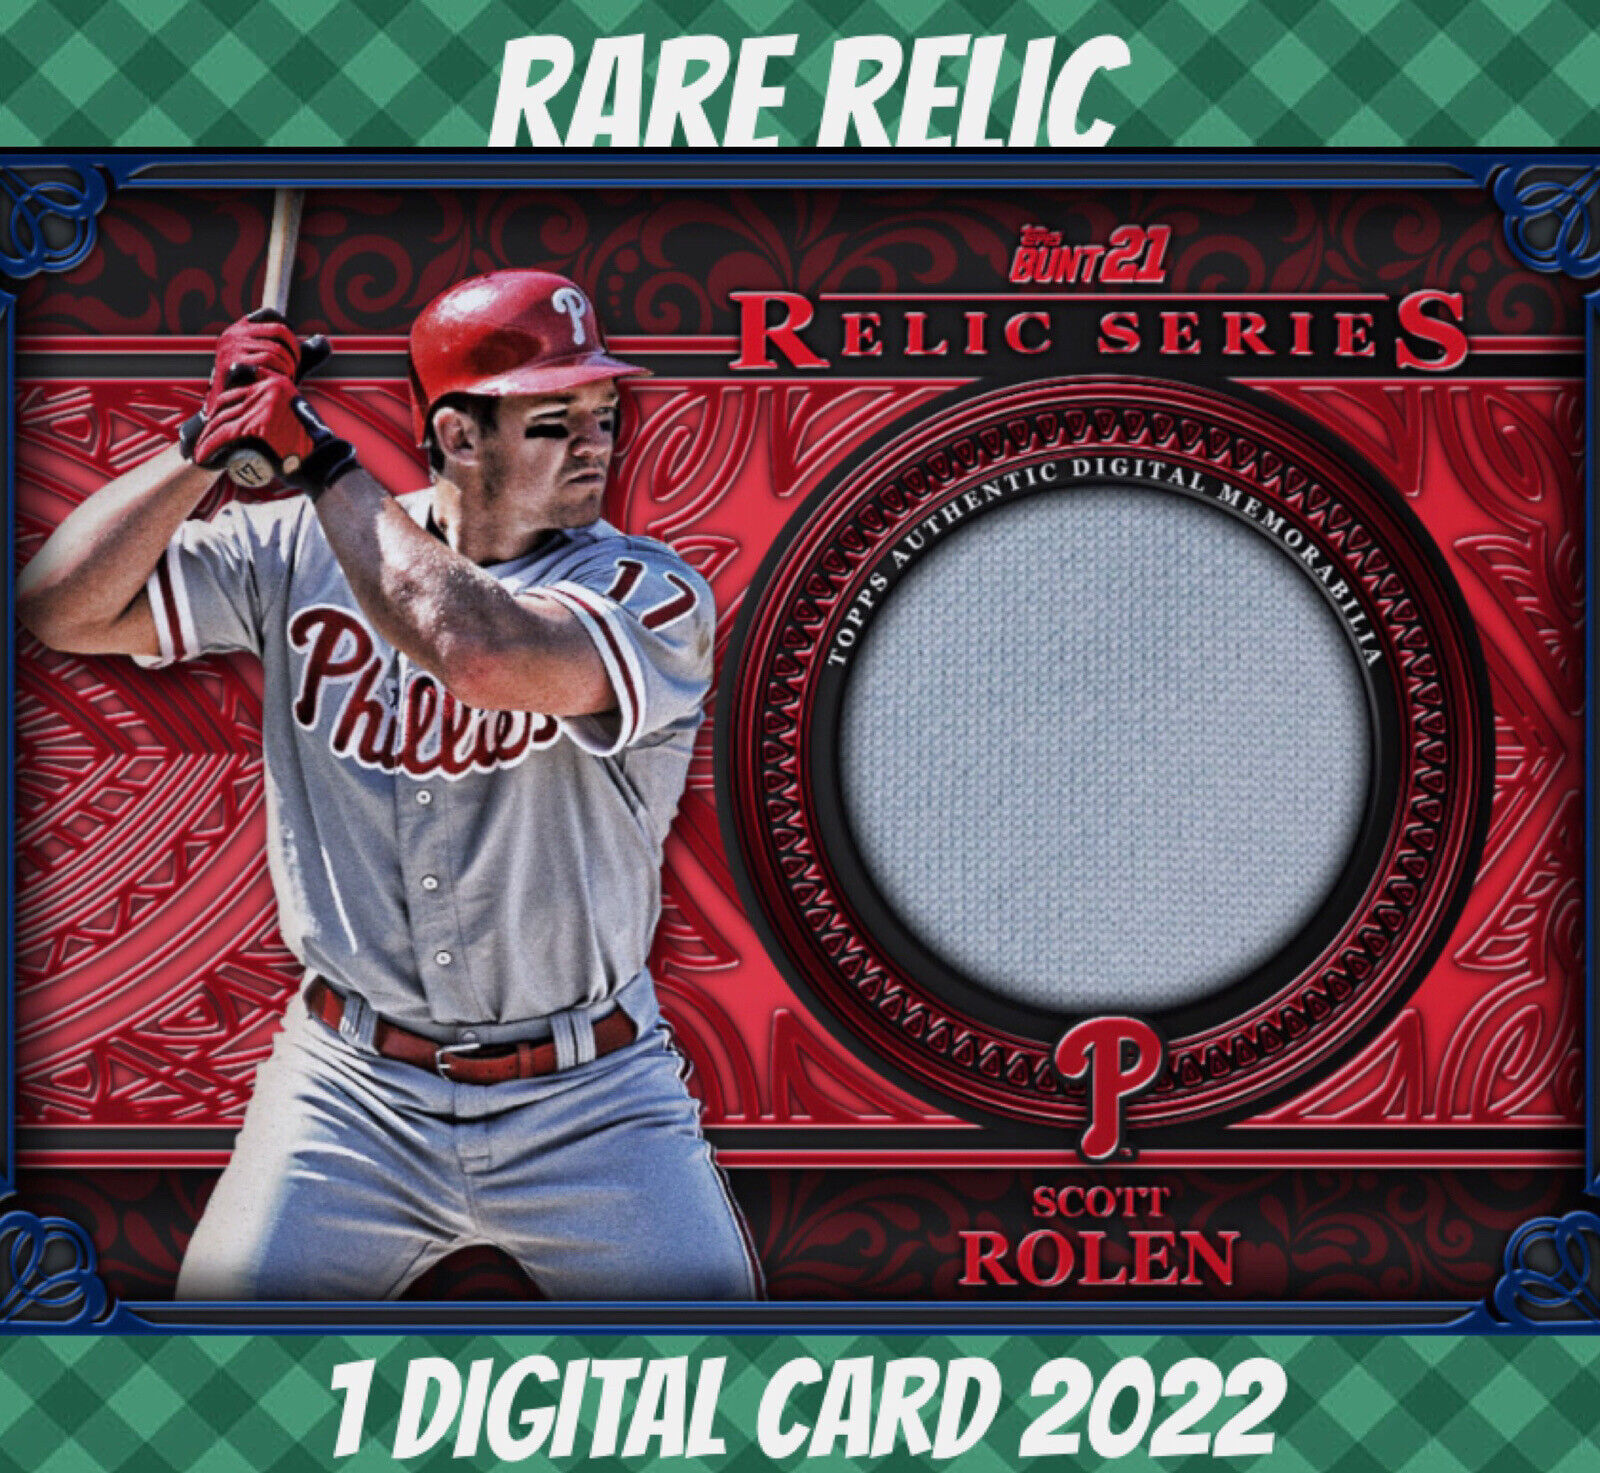 2021 Topps Bunt Scott Rolen Rare Relic Series S/1 Digital Card